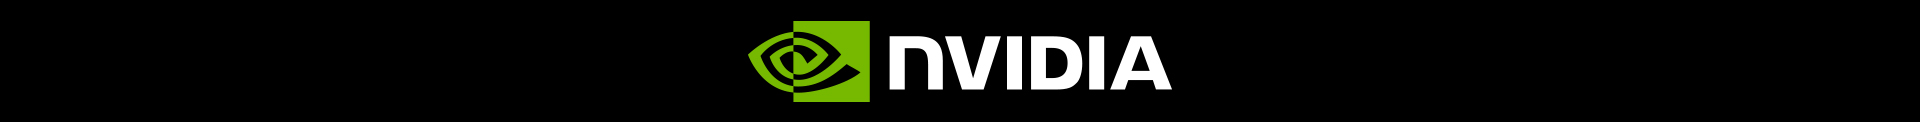 Nvidia Store Page 03.09.nivdia Logo Black